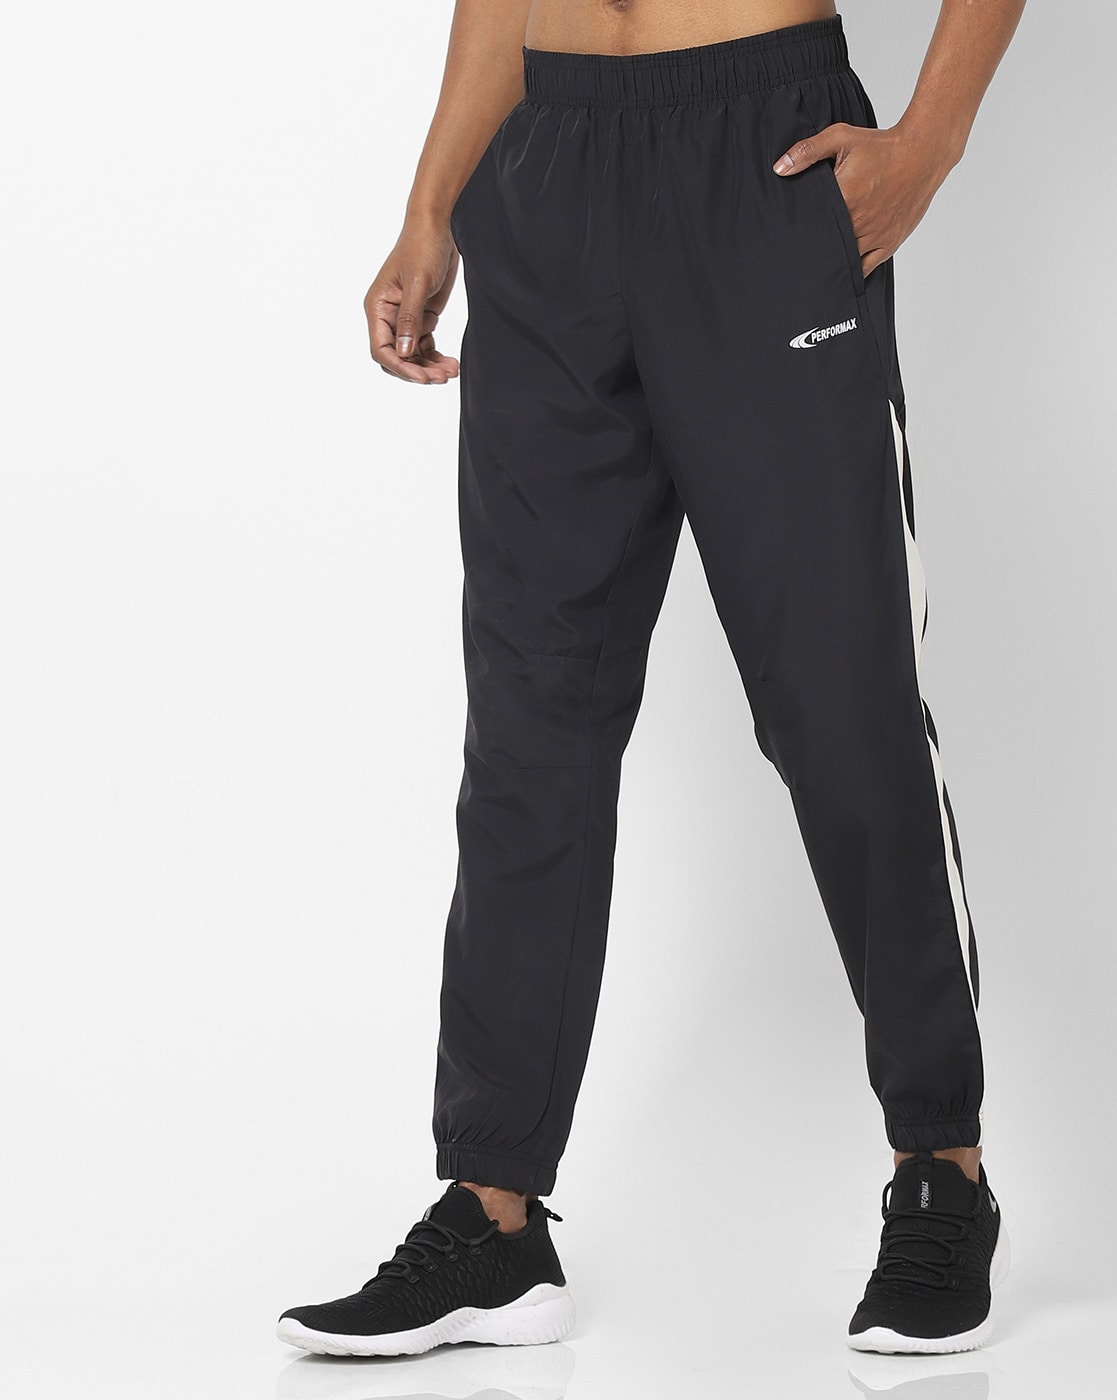 Buy Jet Black Track Pants for Men by PERFORMAX Online